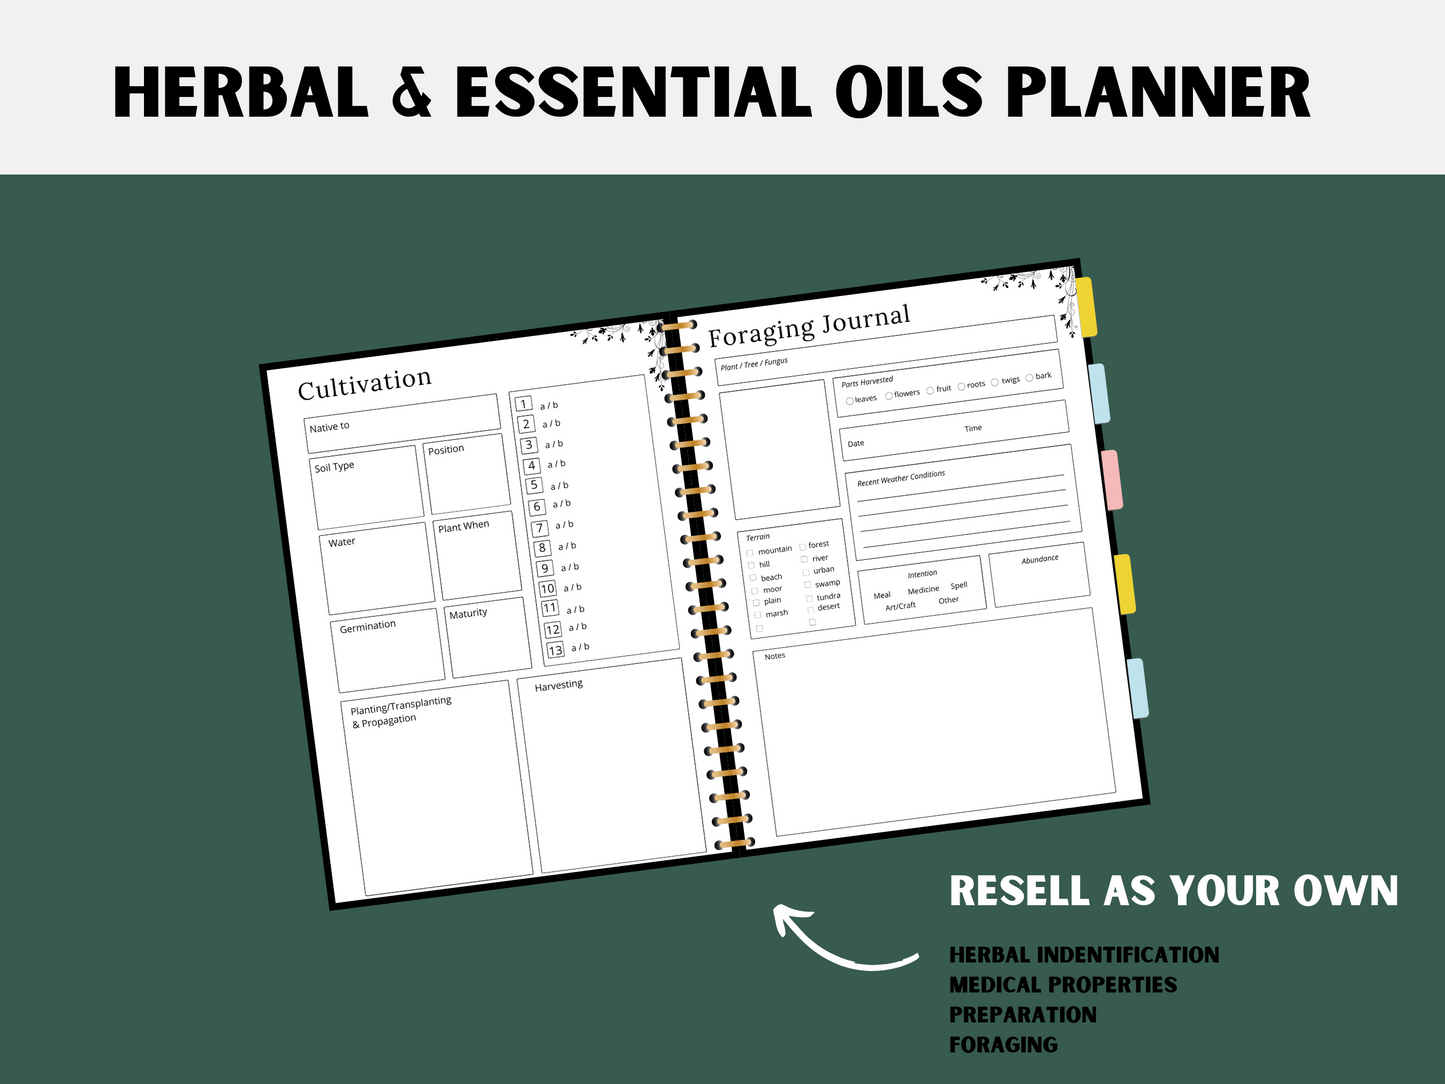 Herbals & Essential Oils Planner